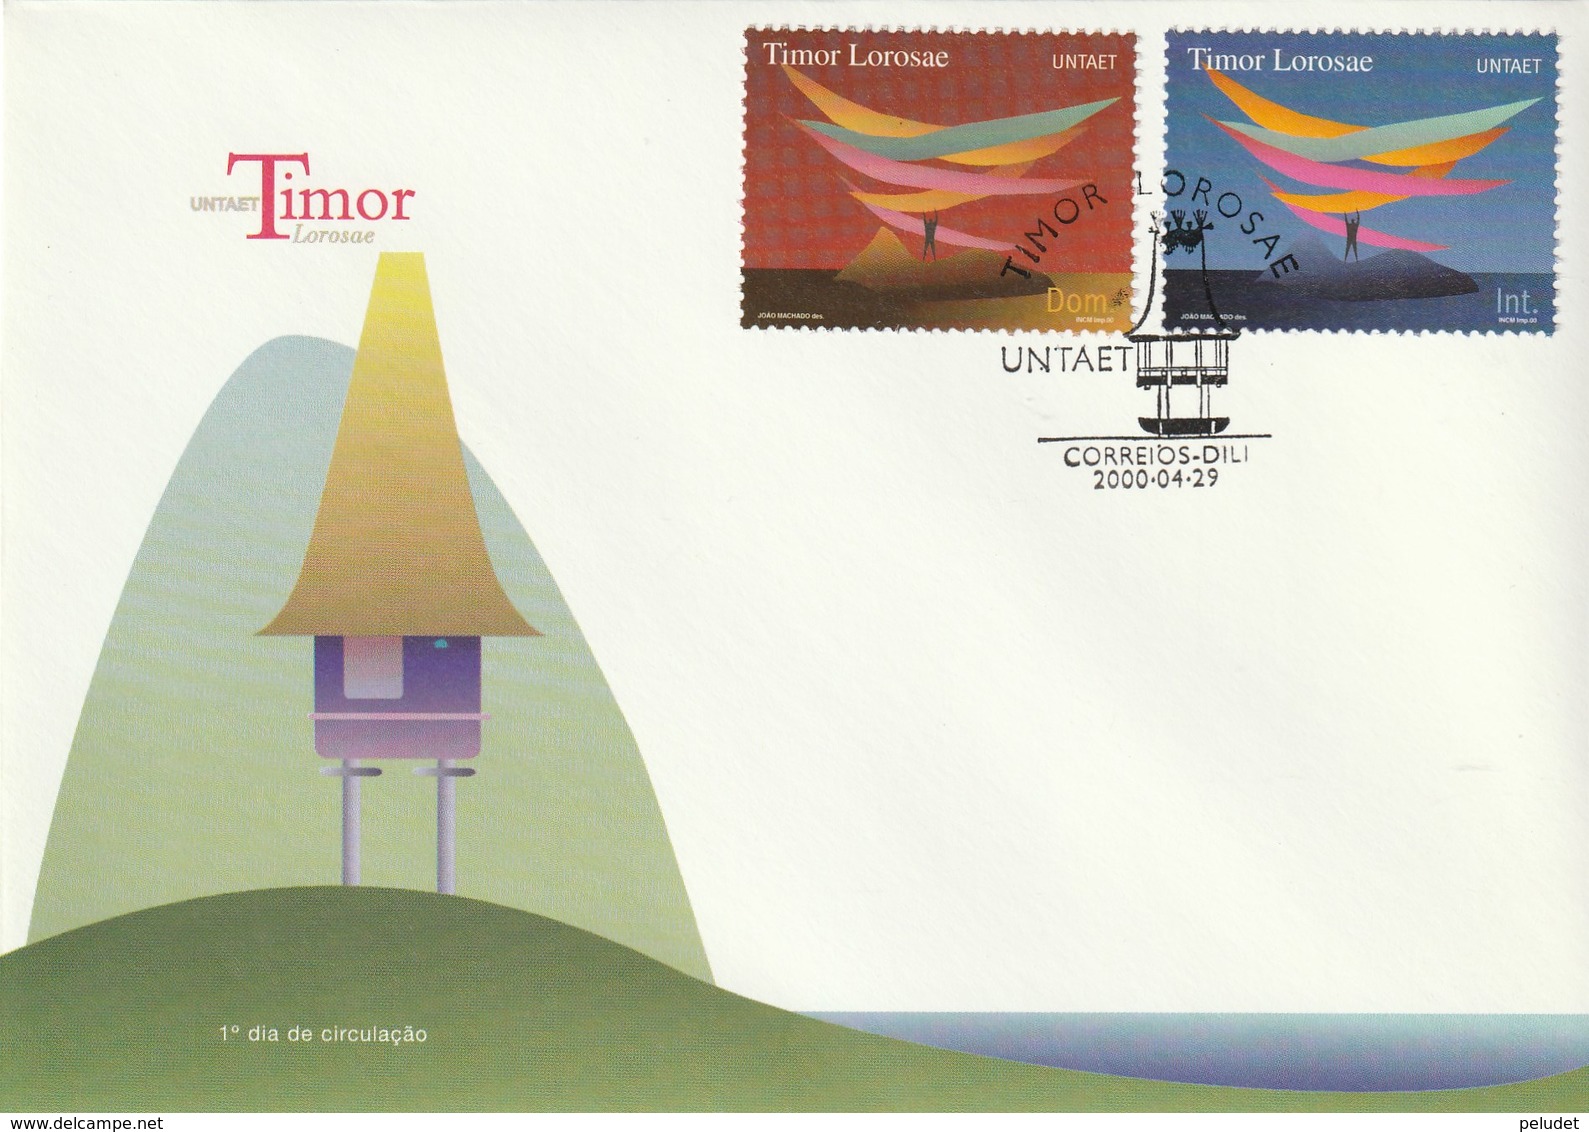 Timor Lorosae - UNTAET FDC 200.04.29 - Timor Oriental